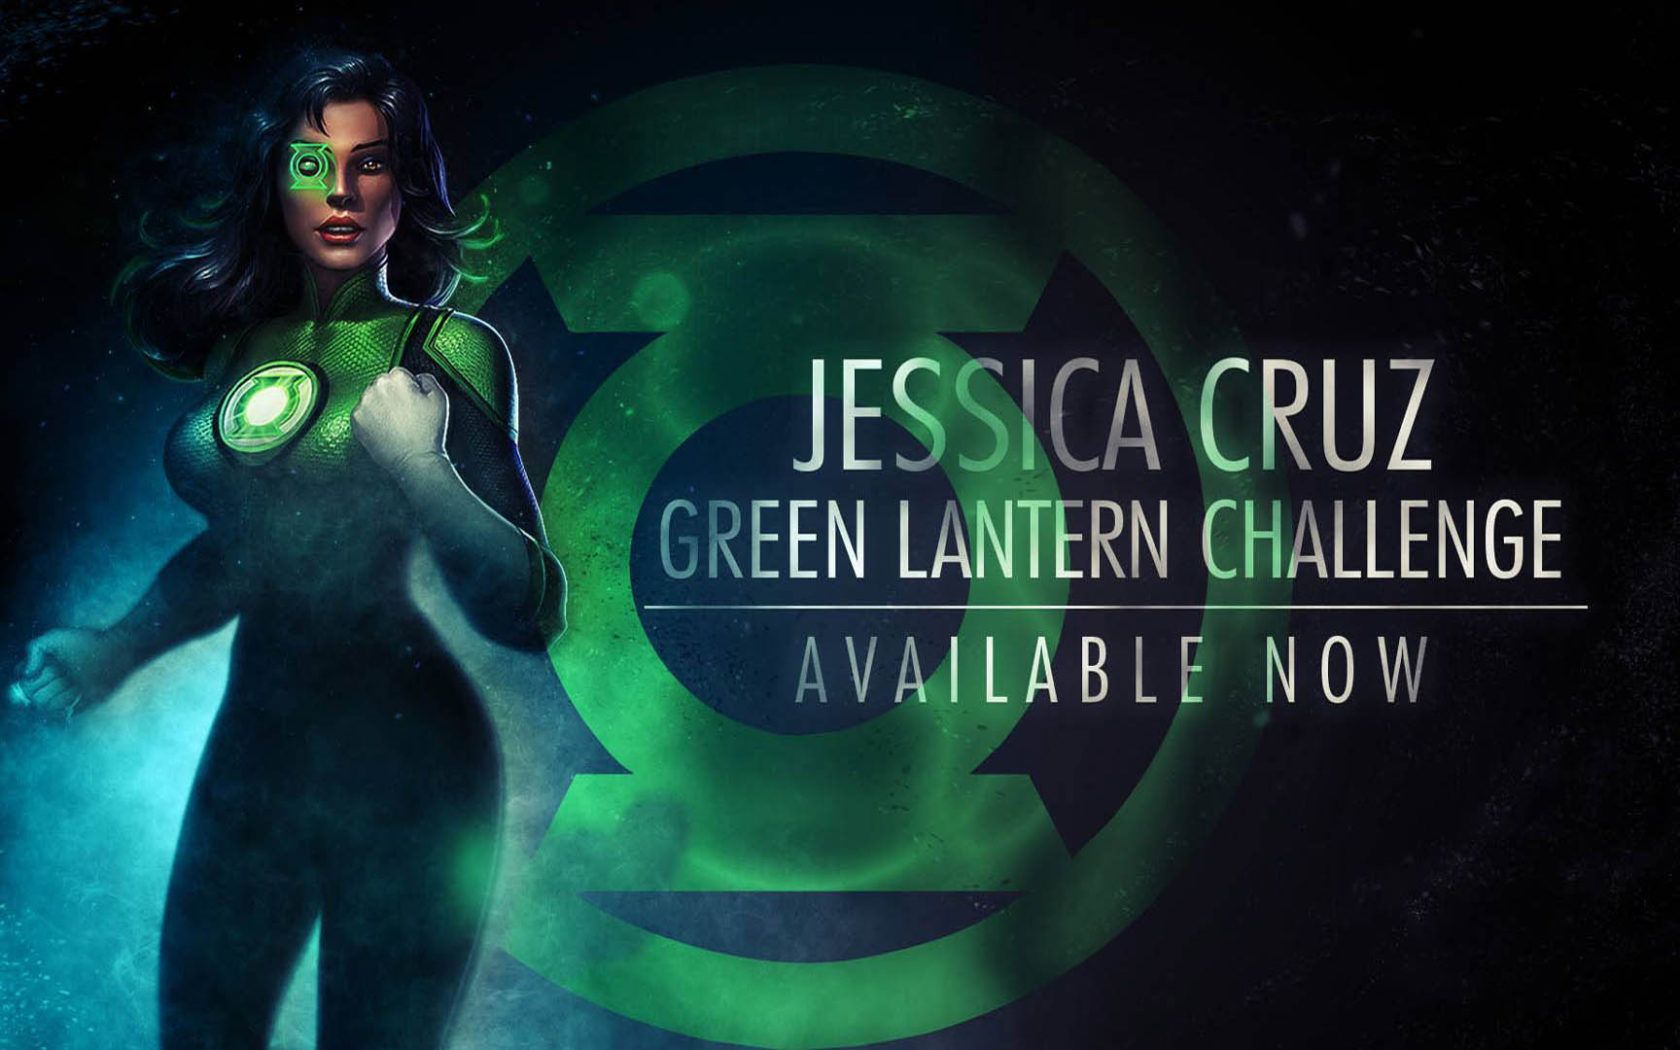 Green Lantern Jessica Cruz Challenge Available Now Wallpaper HD For Deskx1080, Wallpaper13.com